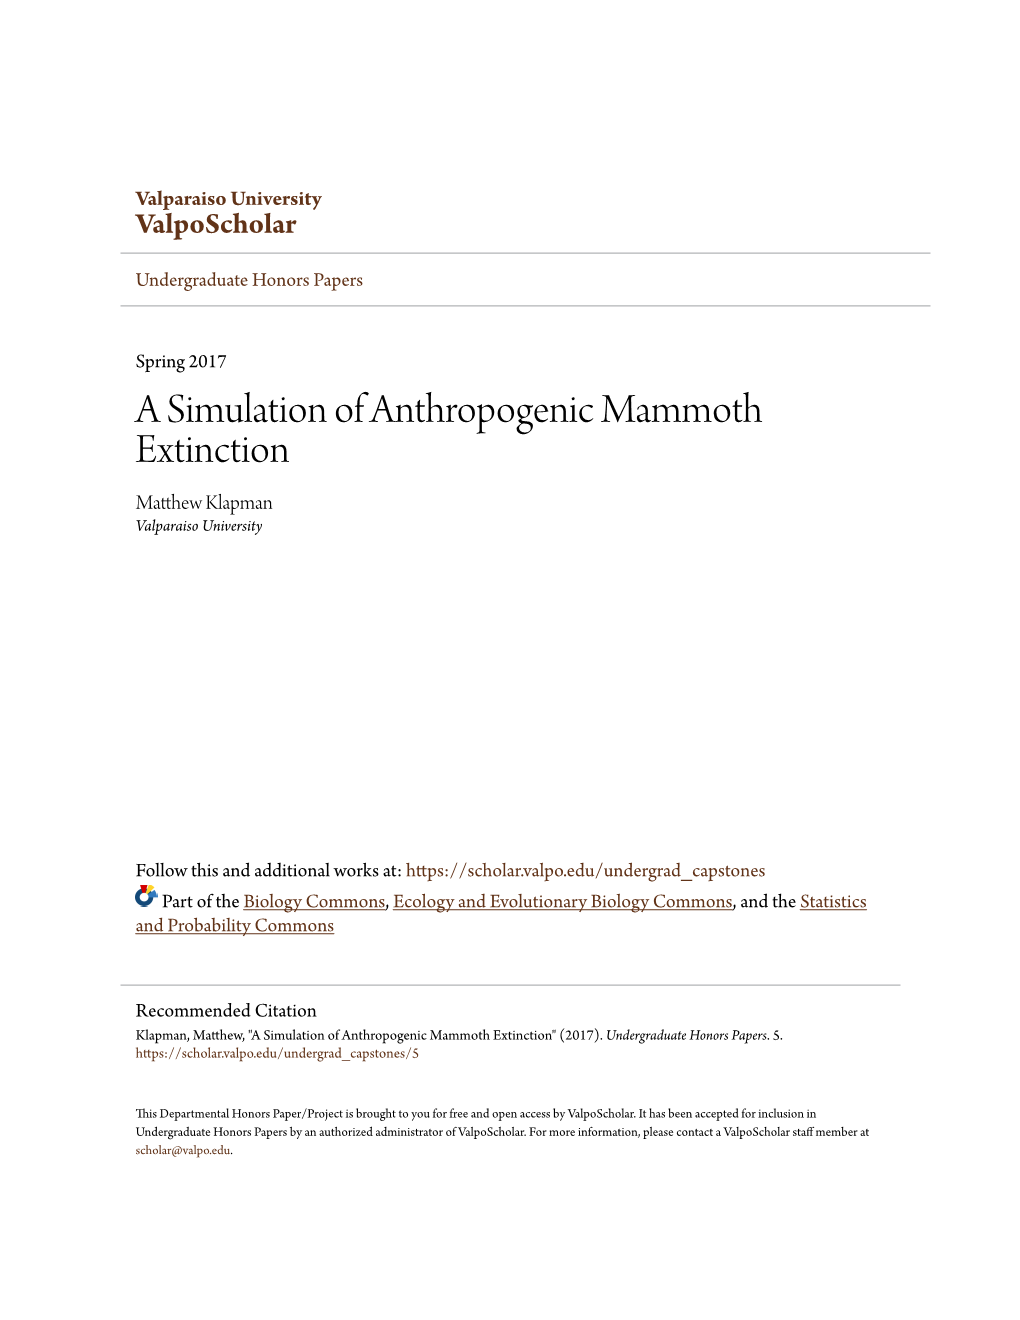 A Simulation of Anthropogenic Mammoth Extinction Matthew Klapman Valparaiso University